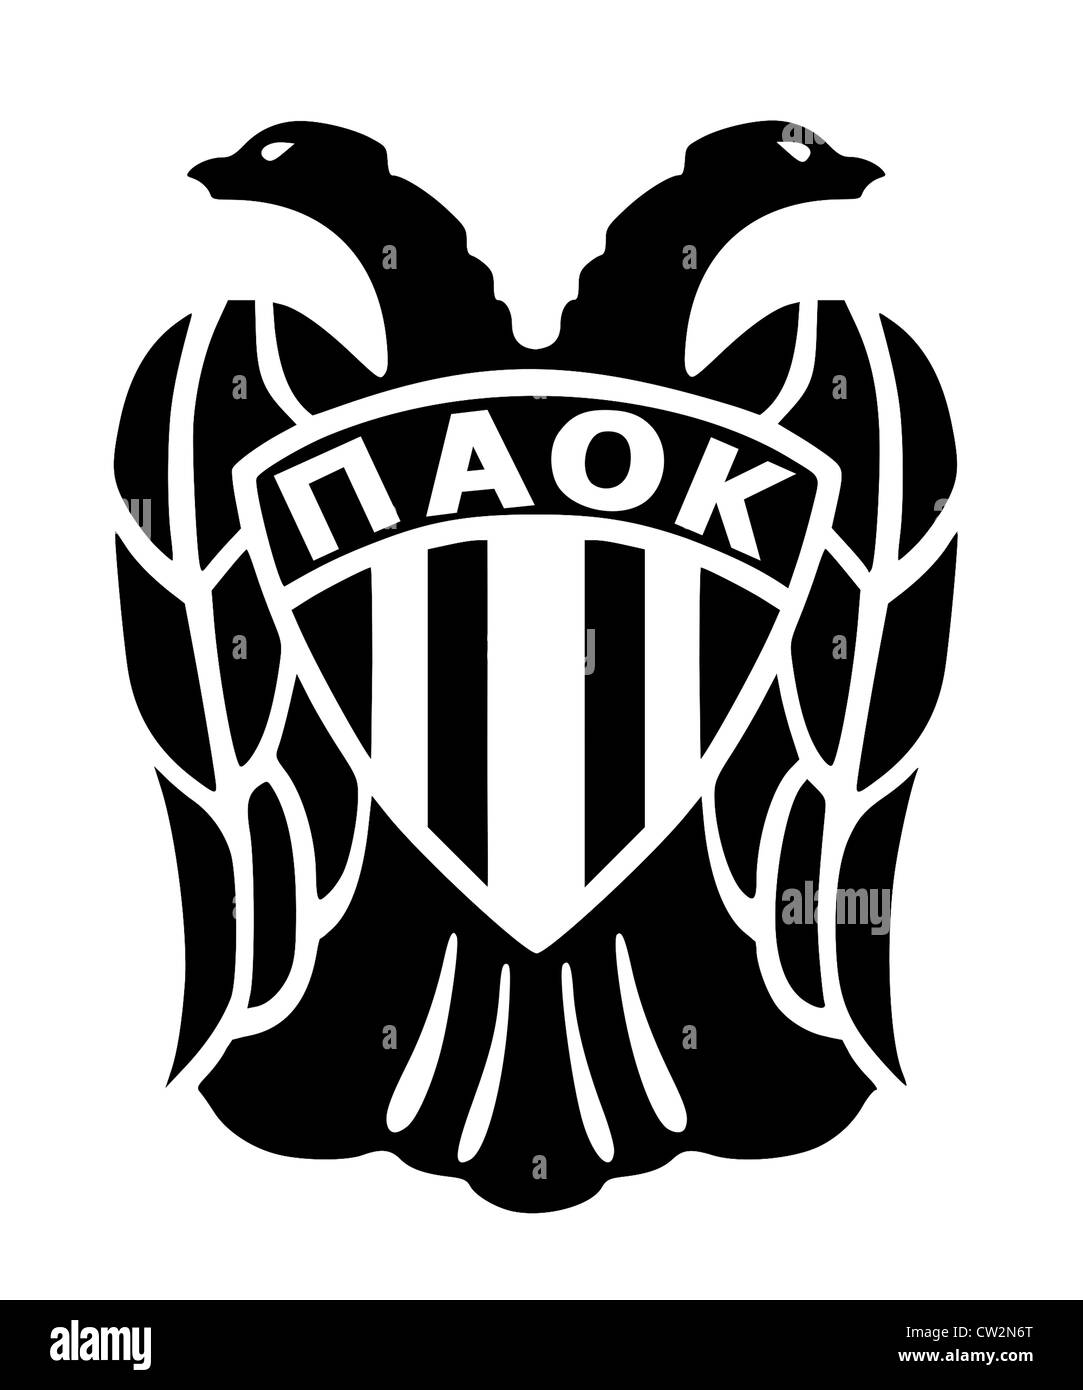 Logo of Greek football team Paok Thessaloniki. Stock Photo